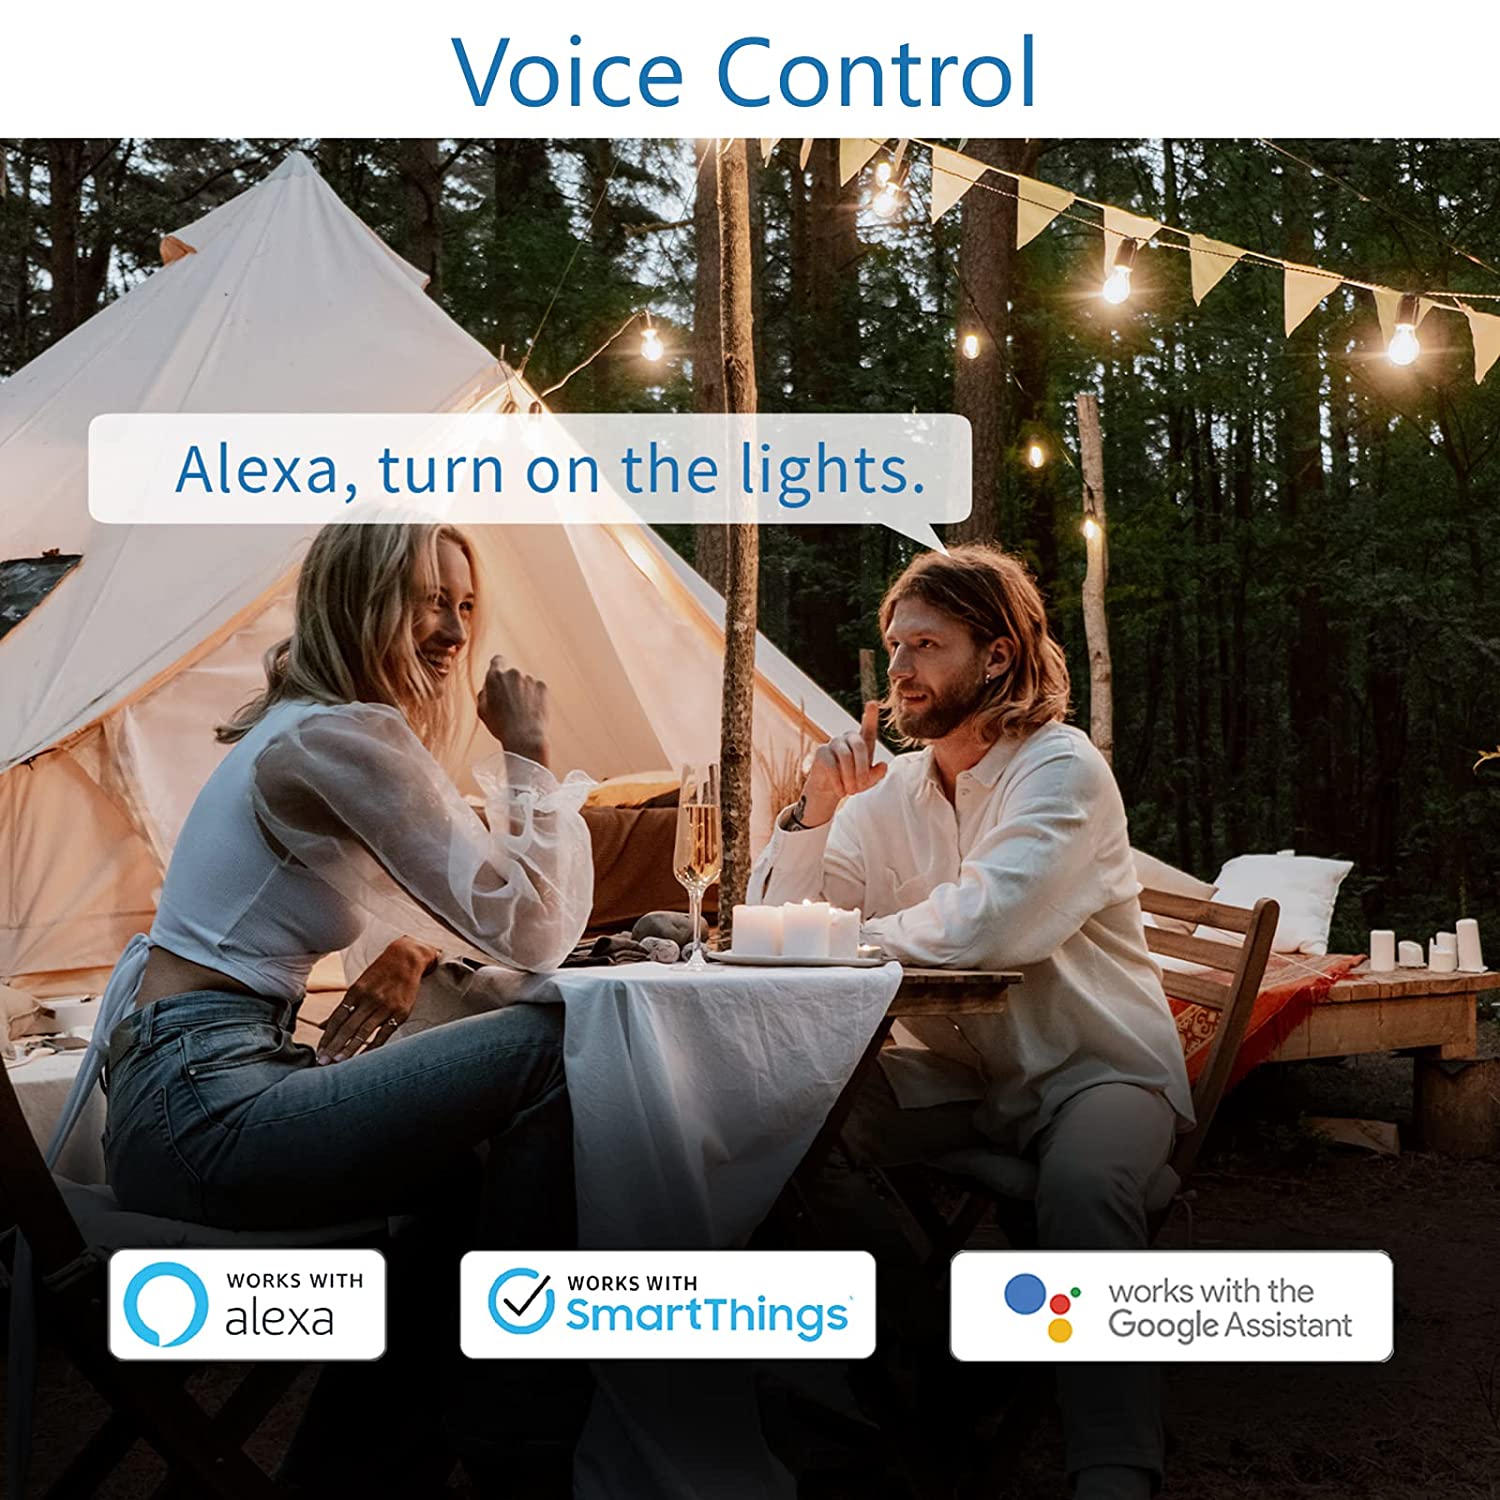 Seedan Outdoor Smart Plug, Outlet Compatible with Alexa, Google